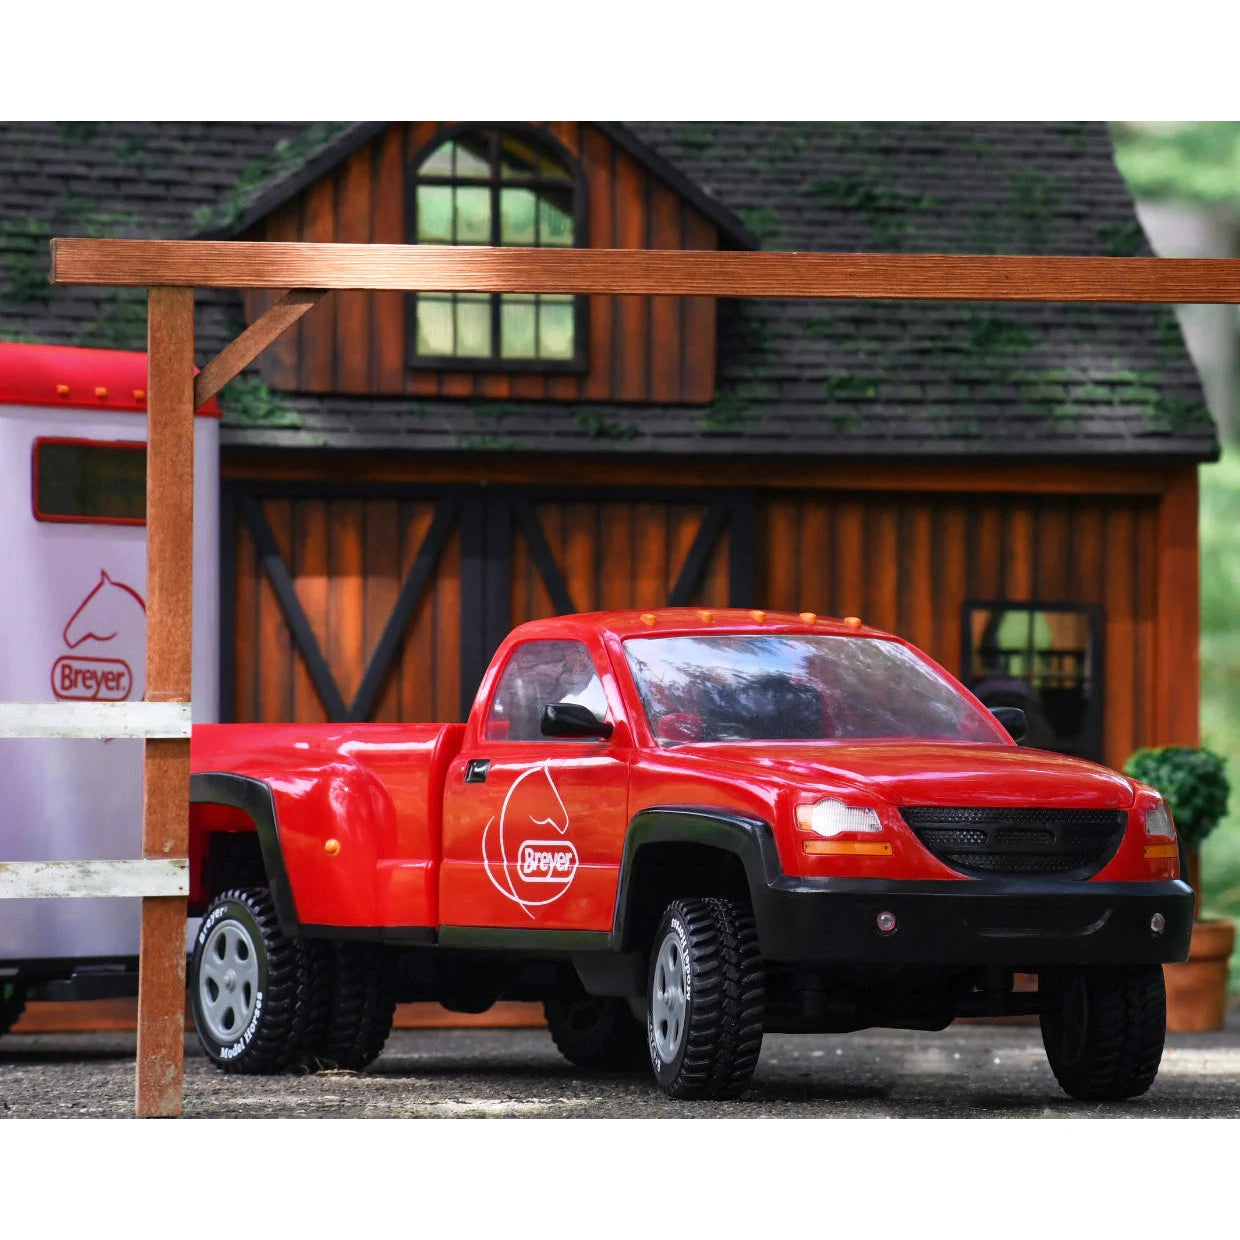 Breyer Traditional Series "Dually" Truck - Red-BREYER-Little Giant Kidz